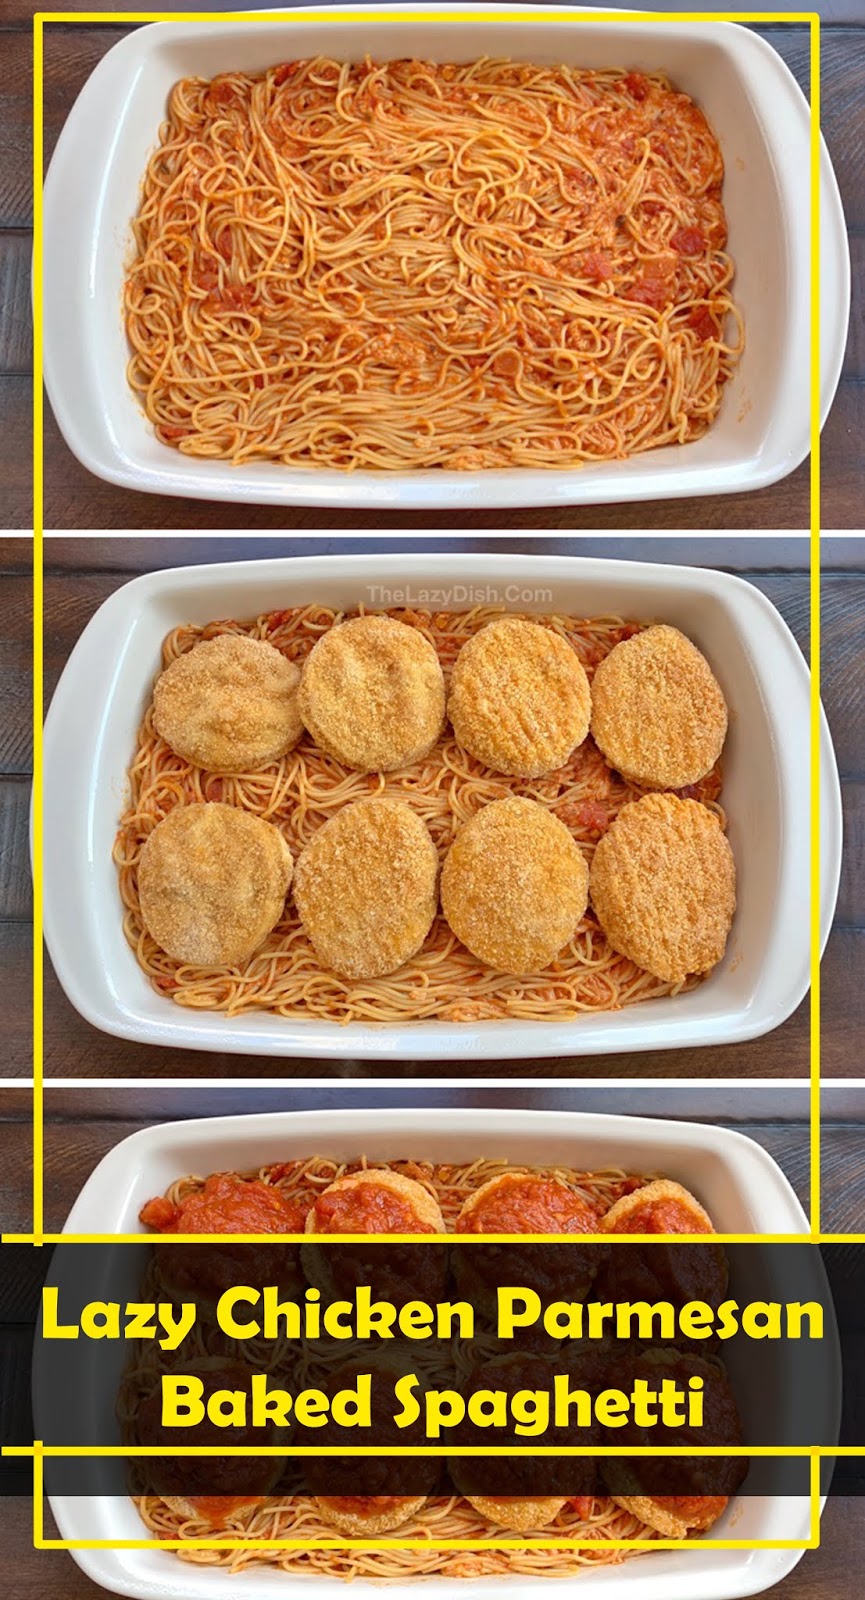 BEST RECIPE Lazy Chicken Parmesan Baked Spaghetti | Healthyrecipes-04